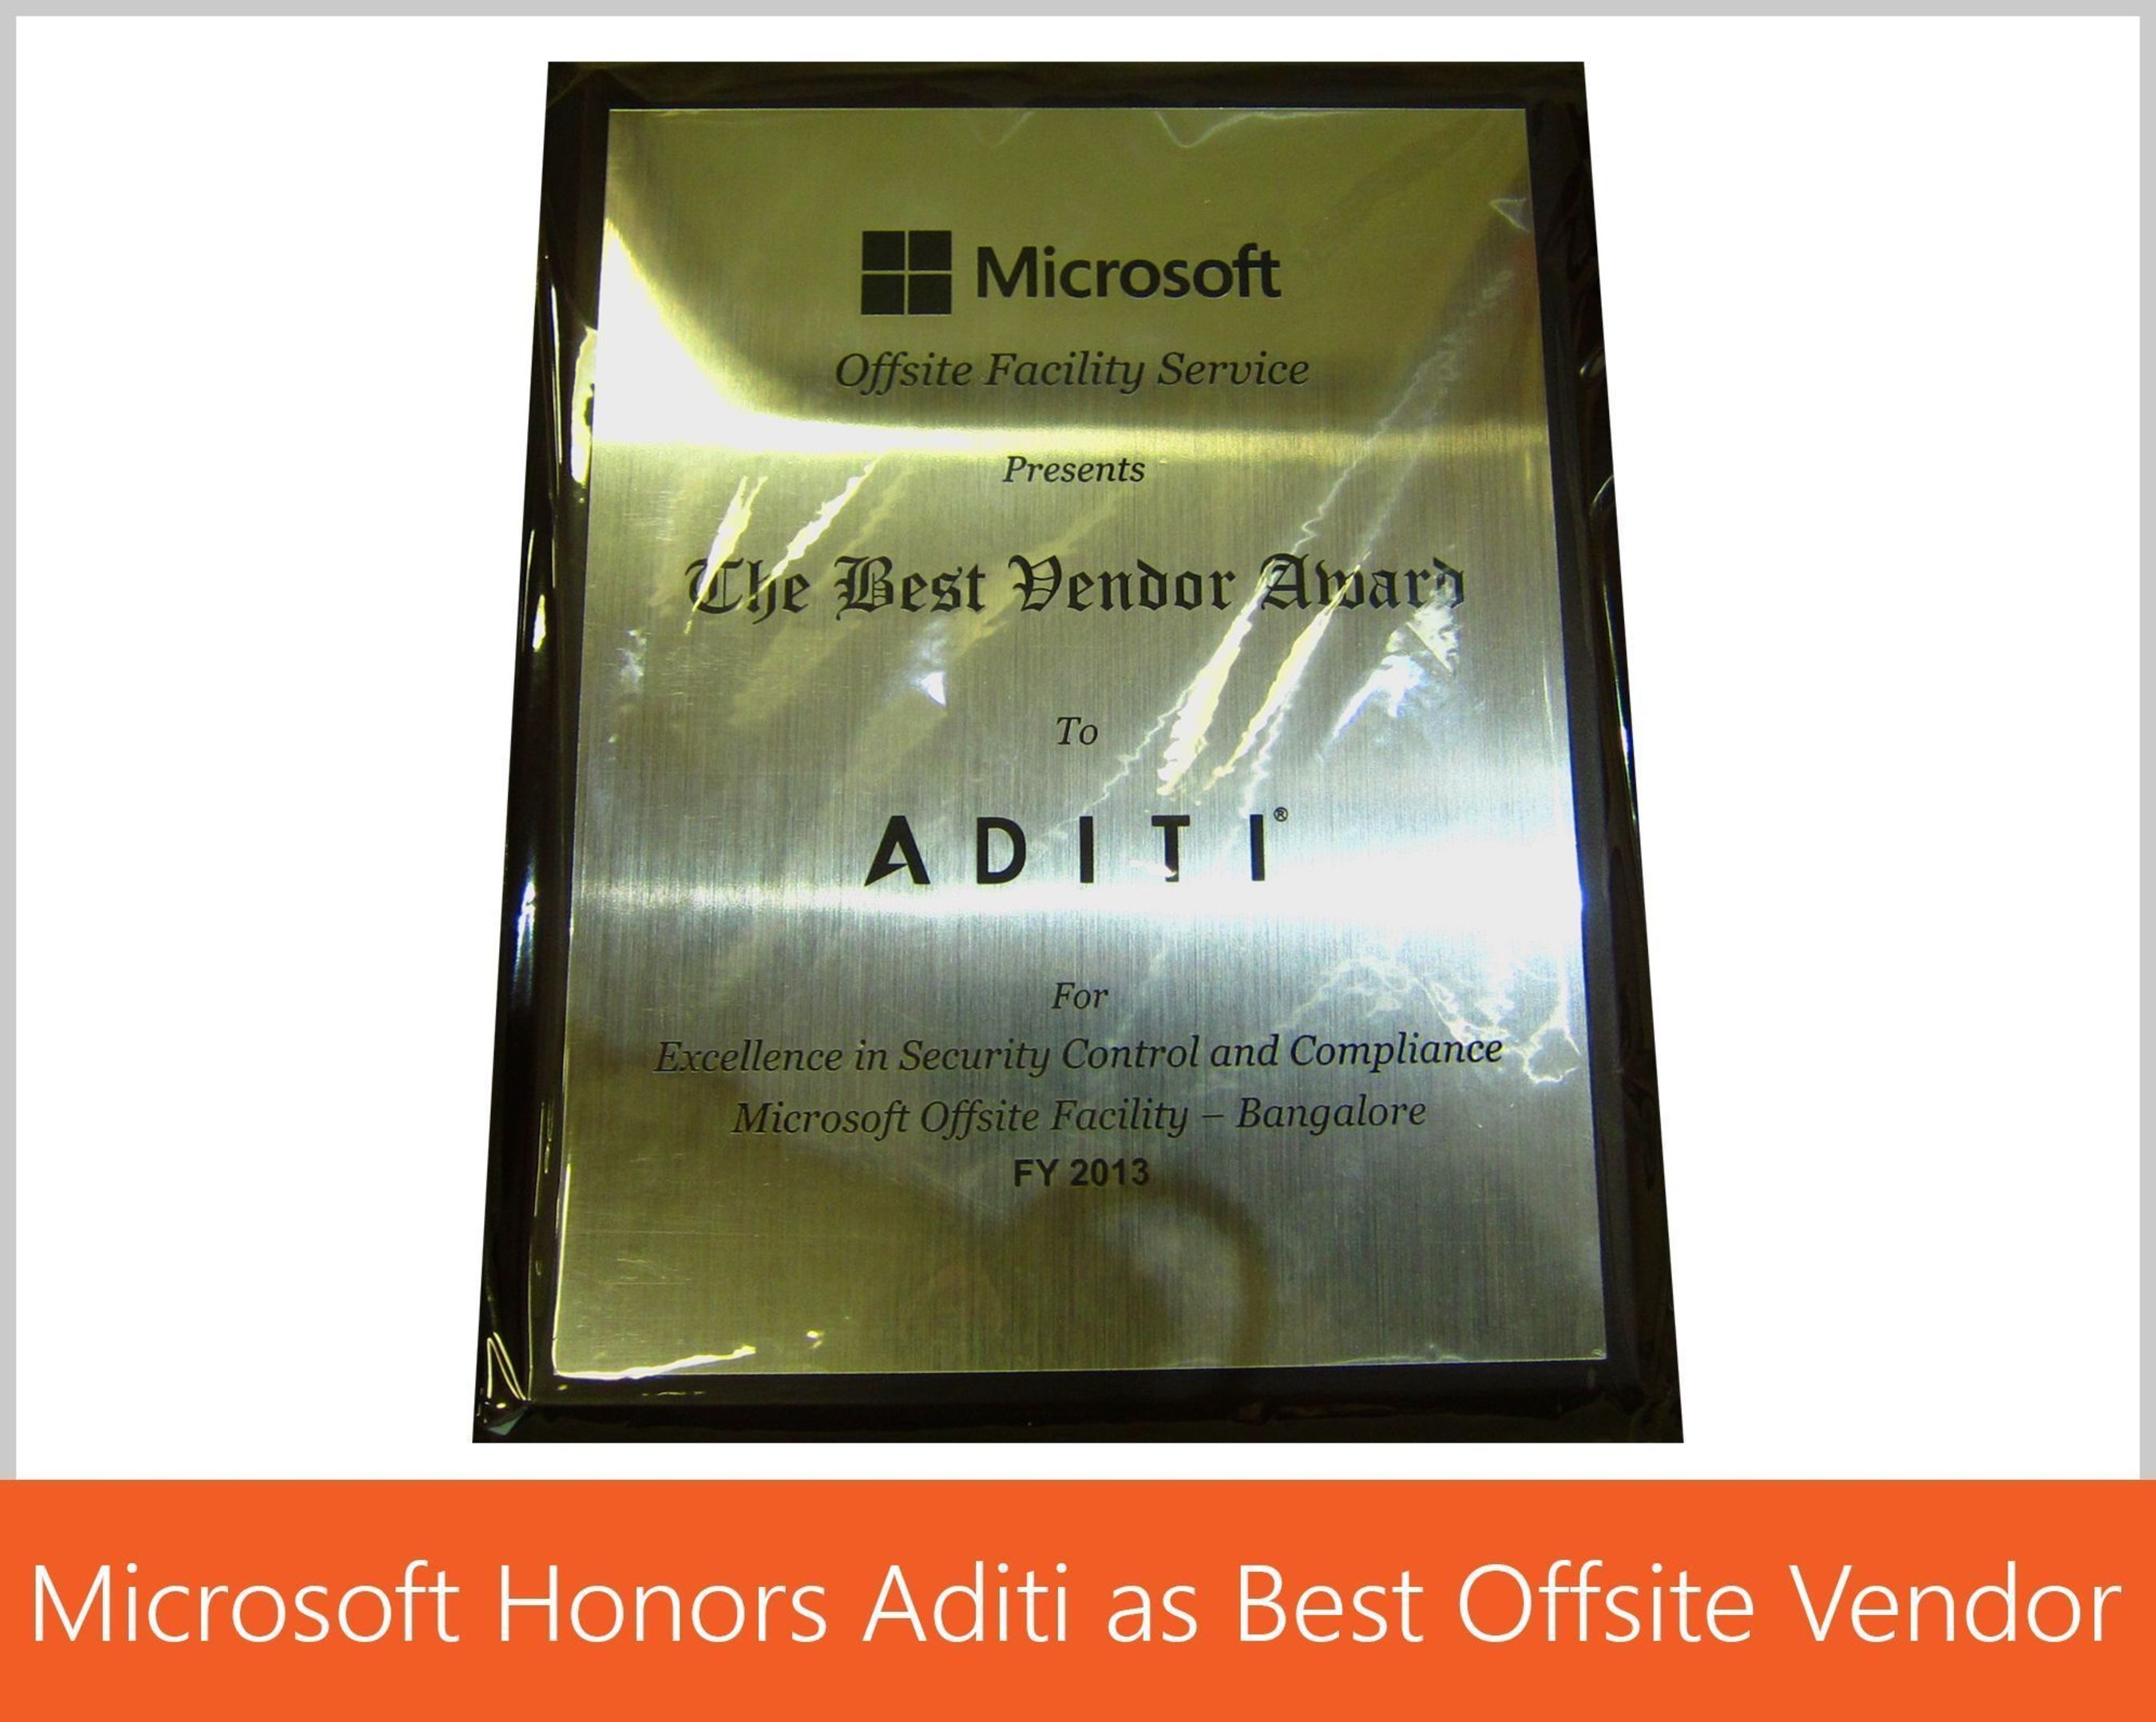 Microsoft Honors Aditi as Best Offshore Vendor (PRNewsFoto/Aditi Technologies Ltd)